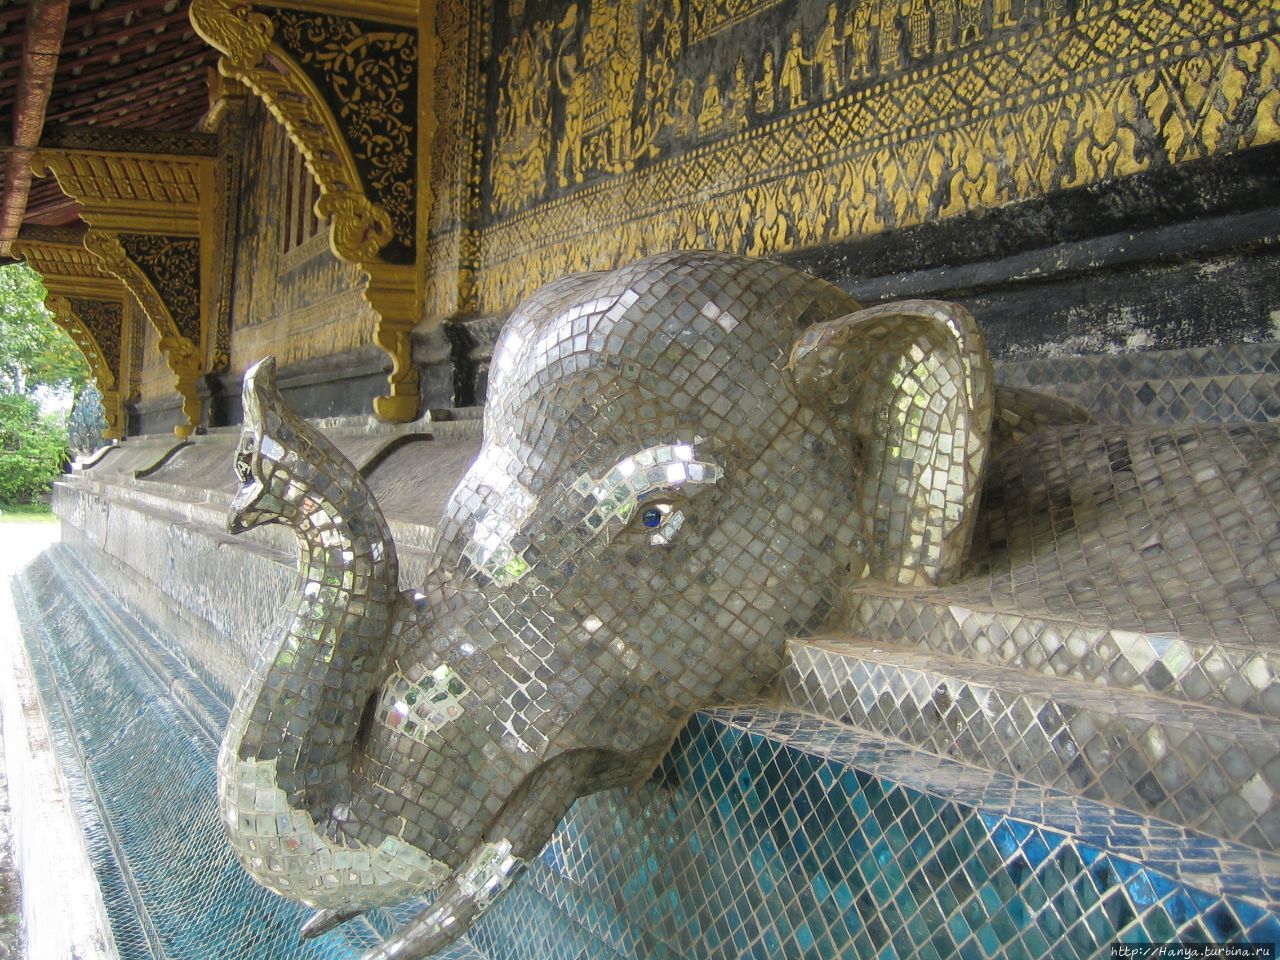 Сим монастыря Сиенгтхонг Луанг-Прабанг, Лаос